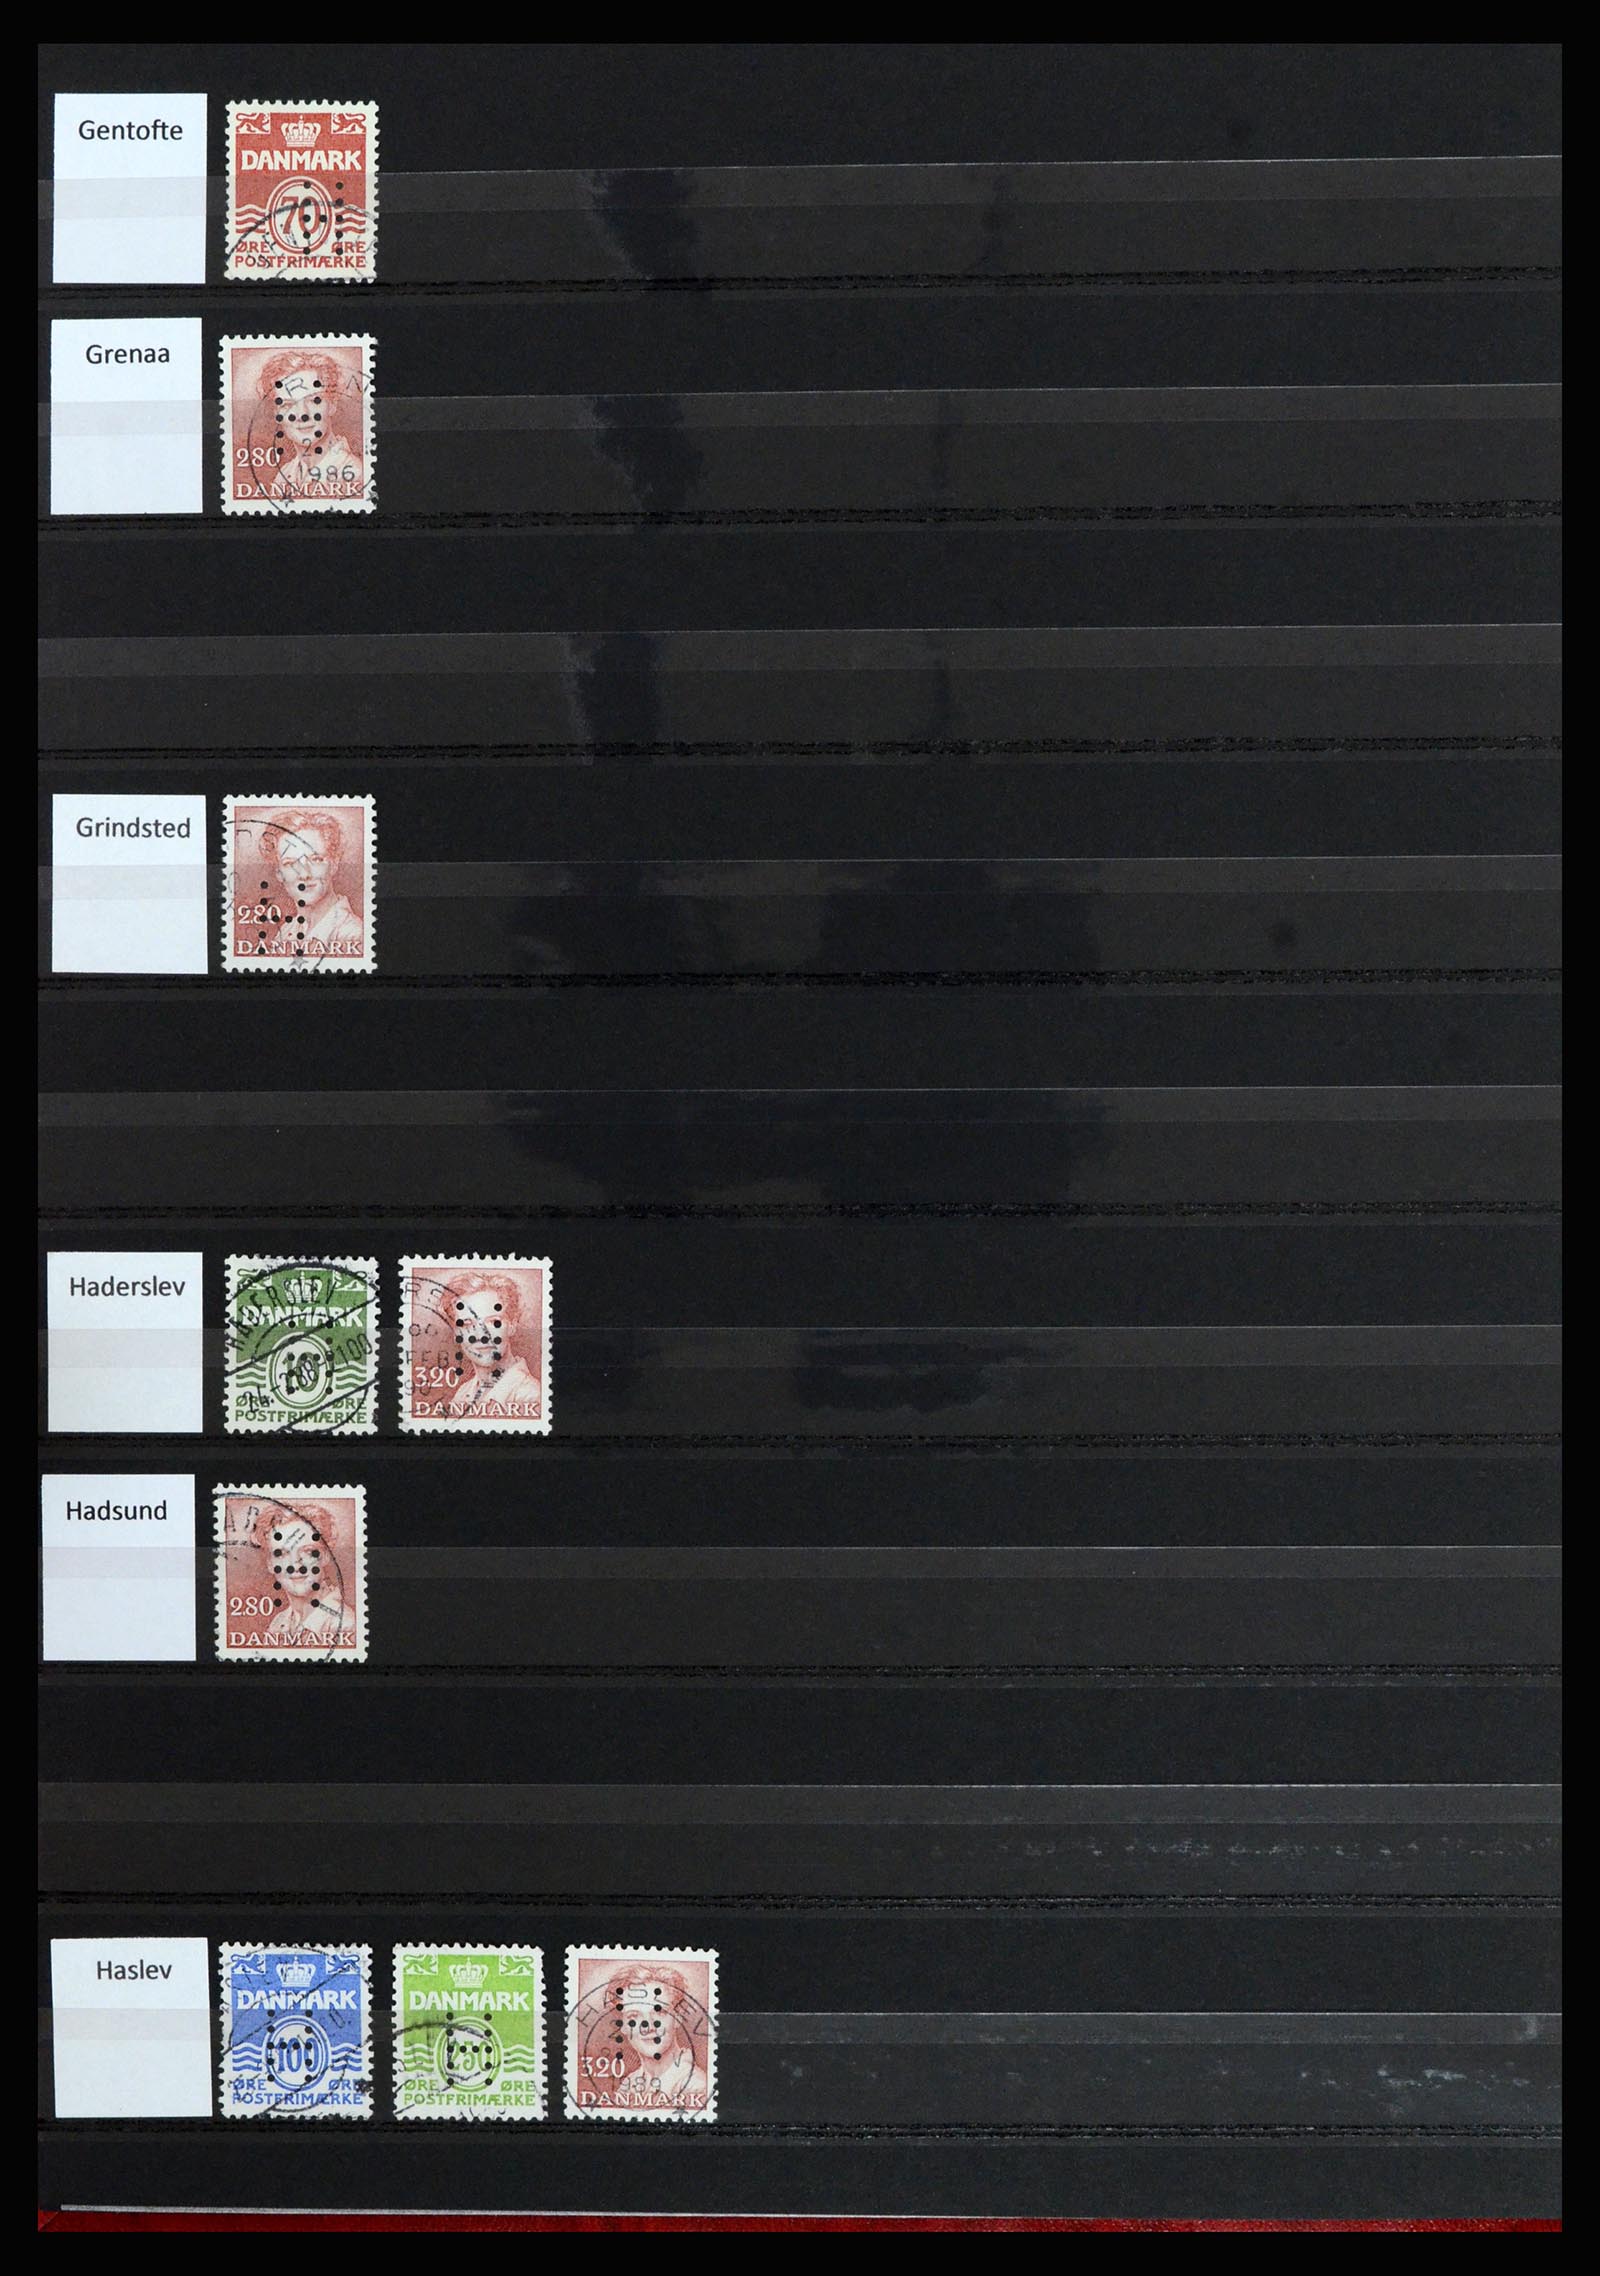 37056 020 - Stamp collection 37056 Denmark perfins.